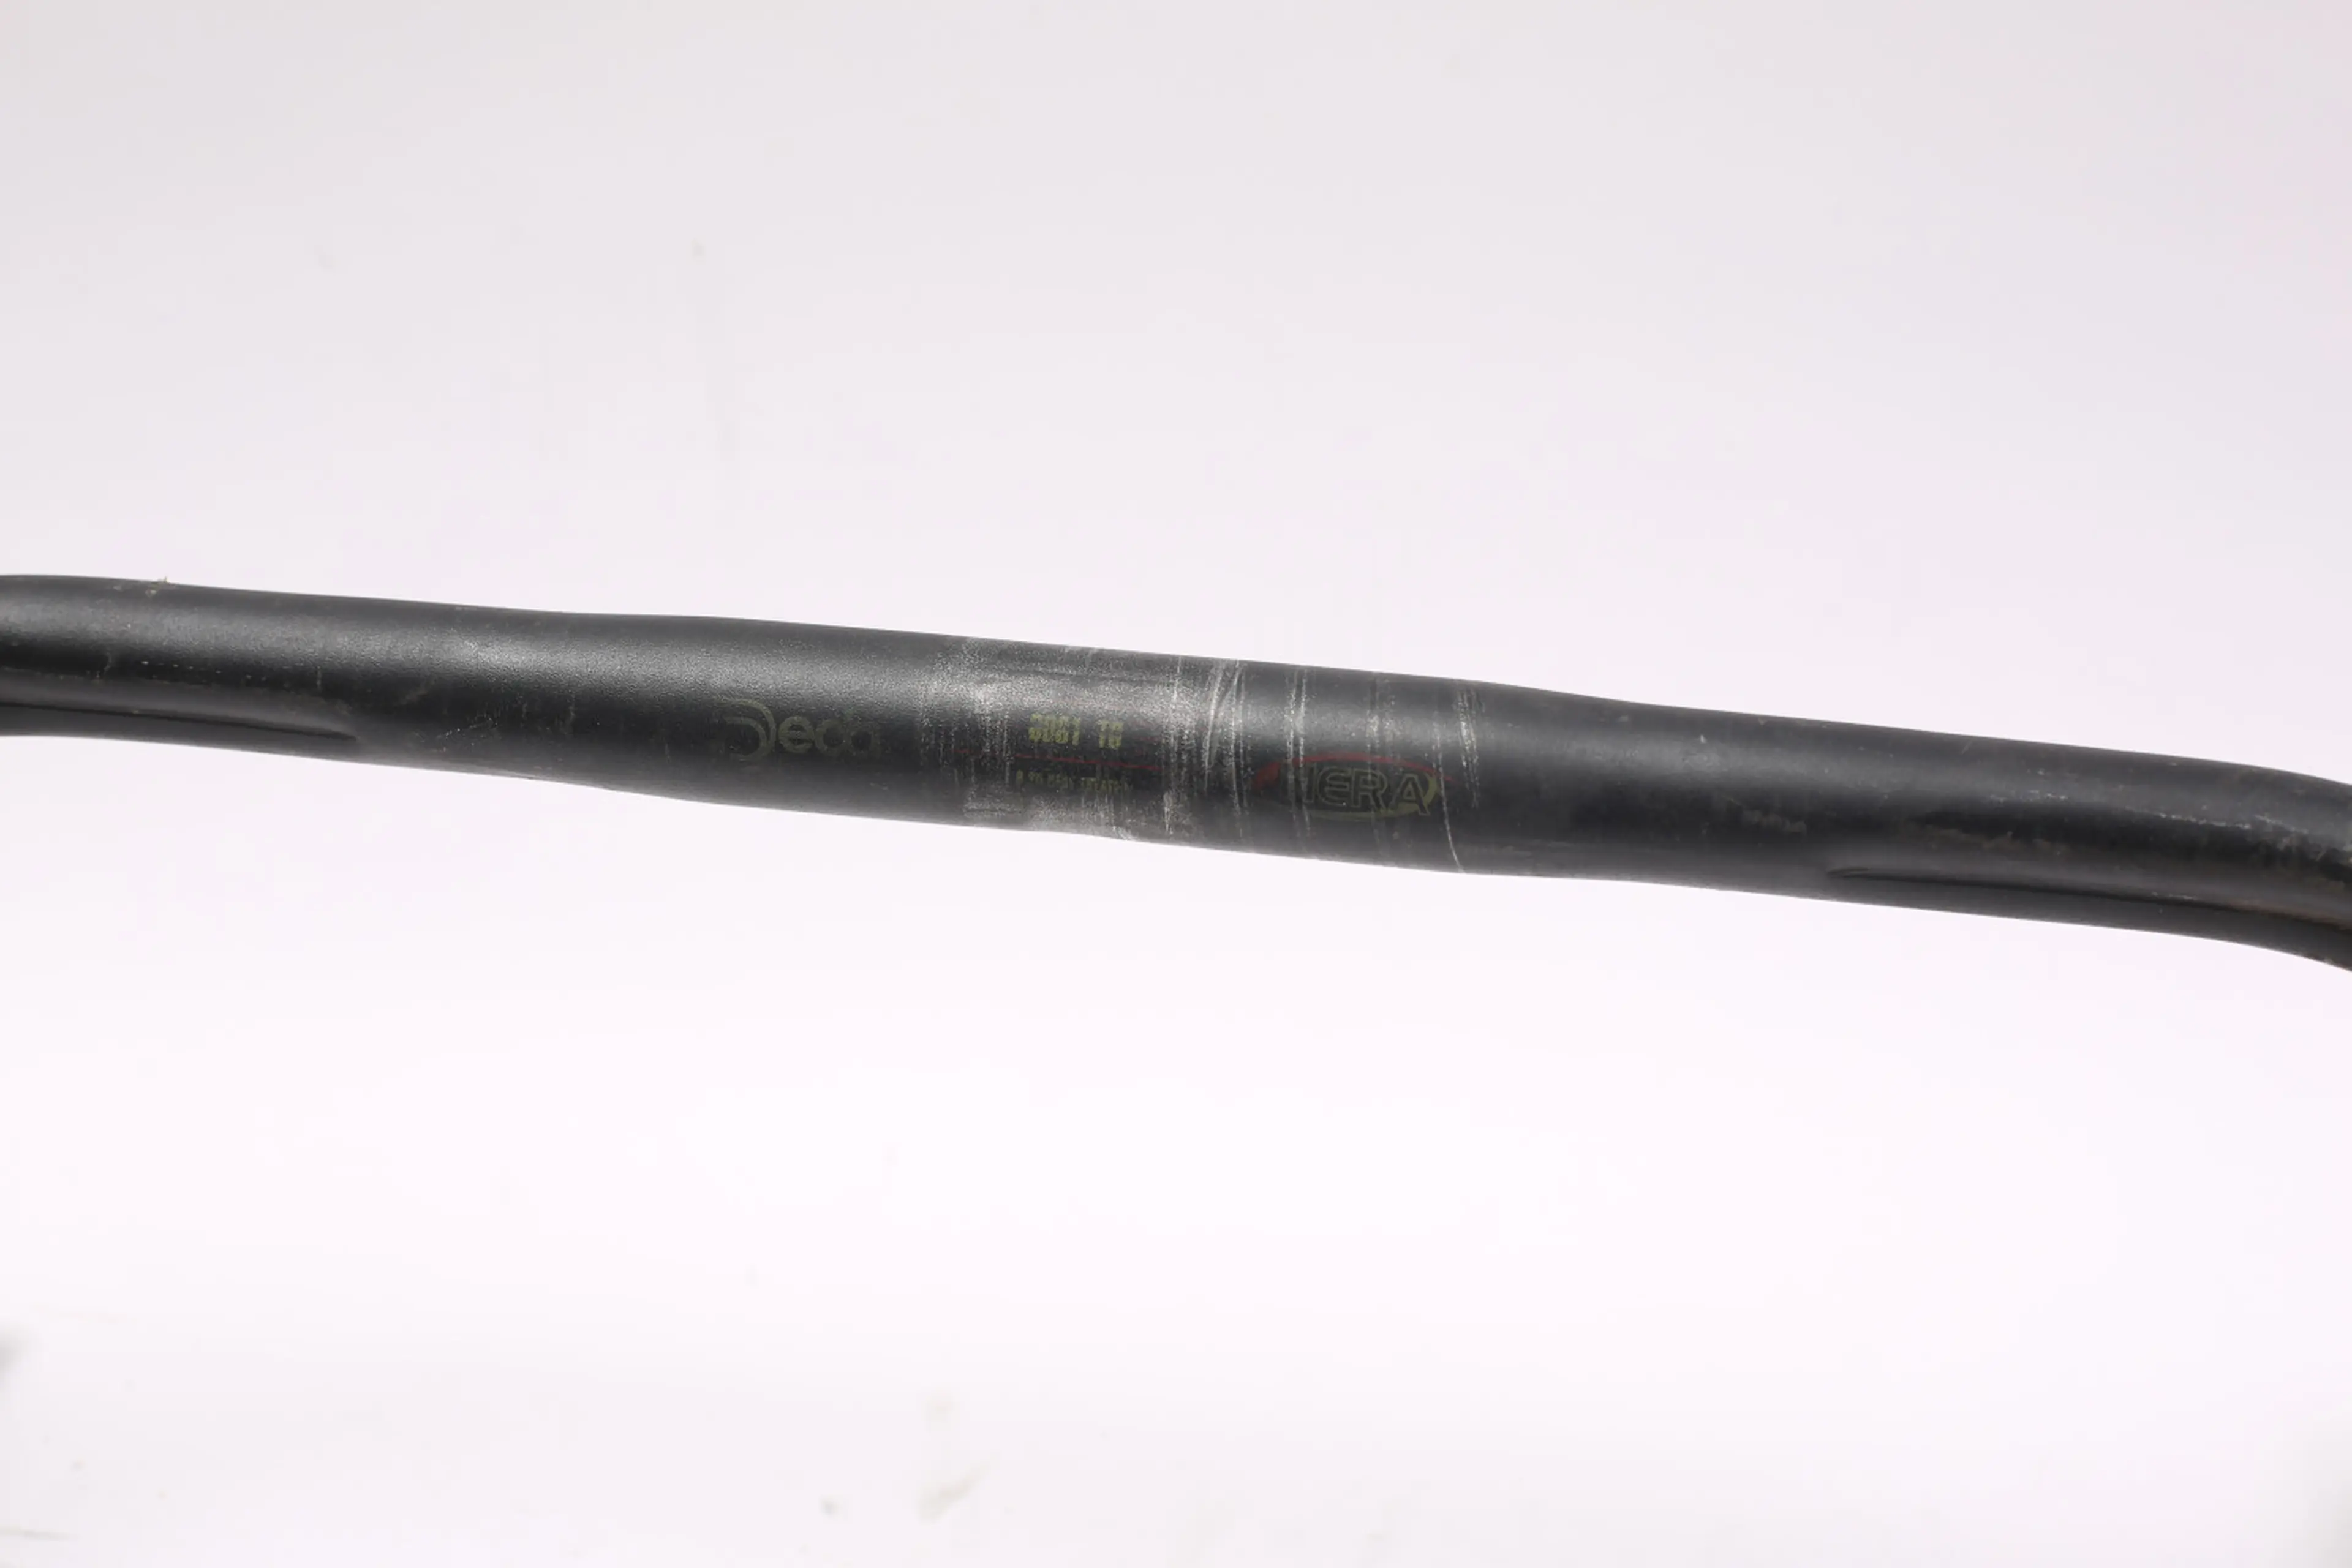 2. Ghidon cursiera Deda Nera  26.0 latime 43.5 cm